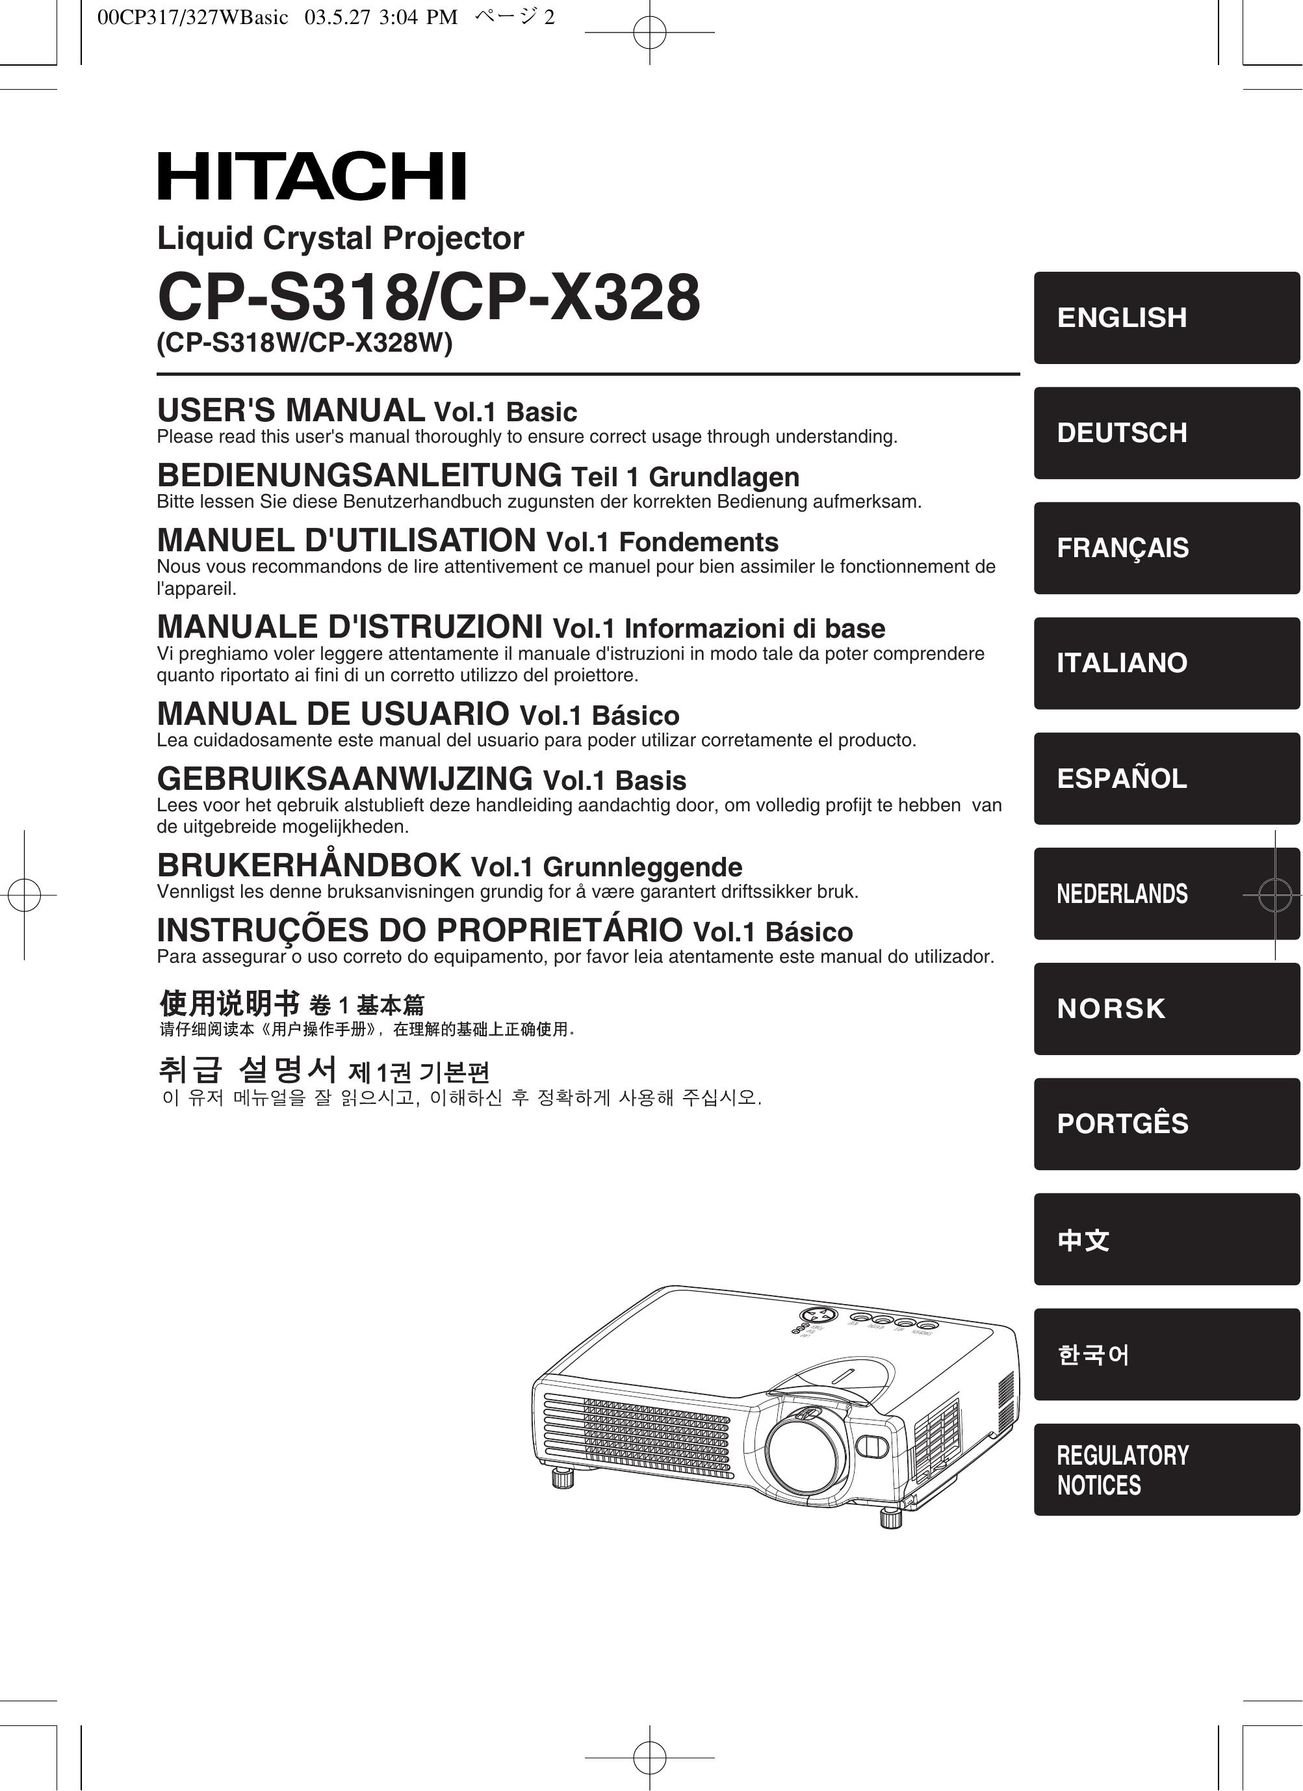 Hitachi cp-s318 Projector User Manual